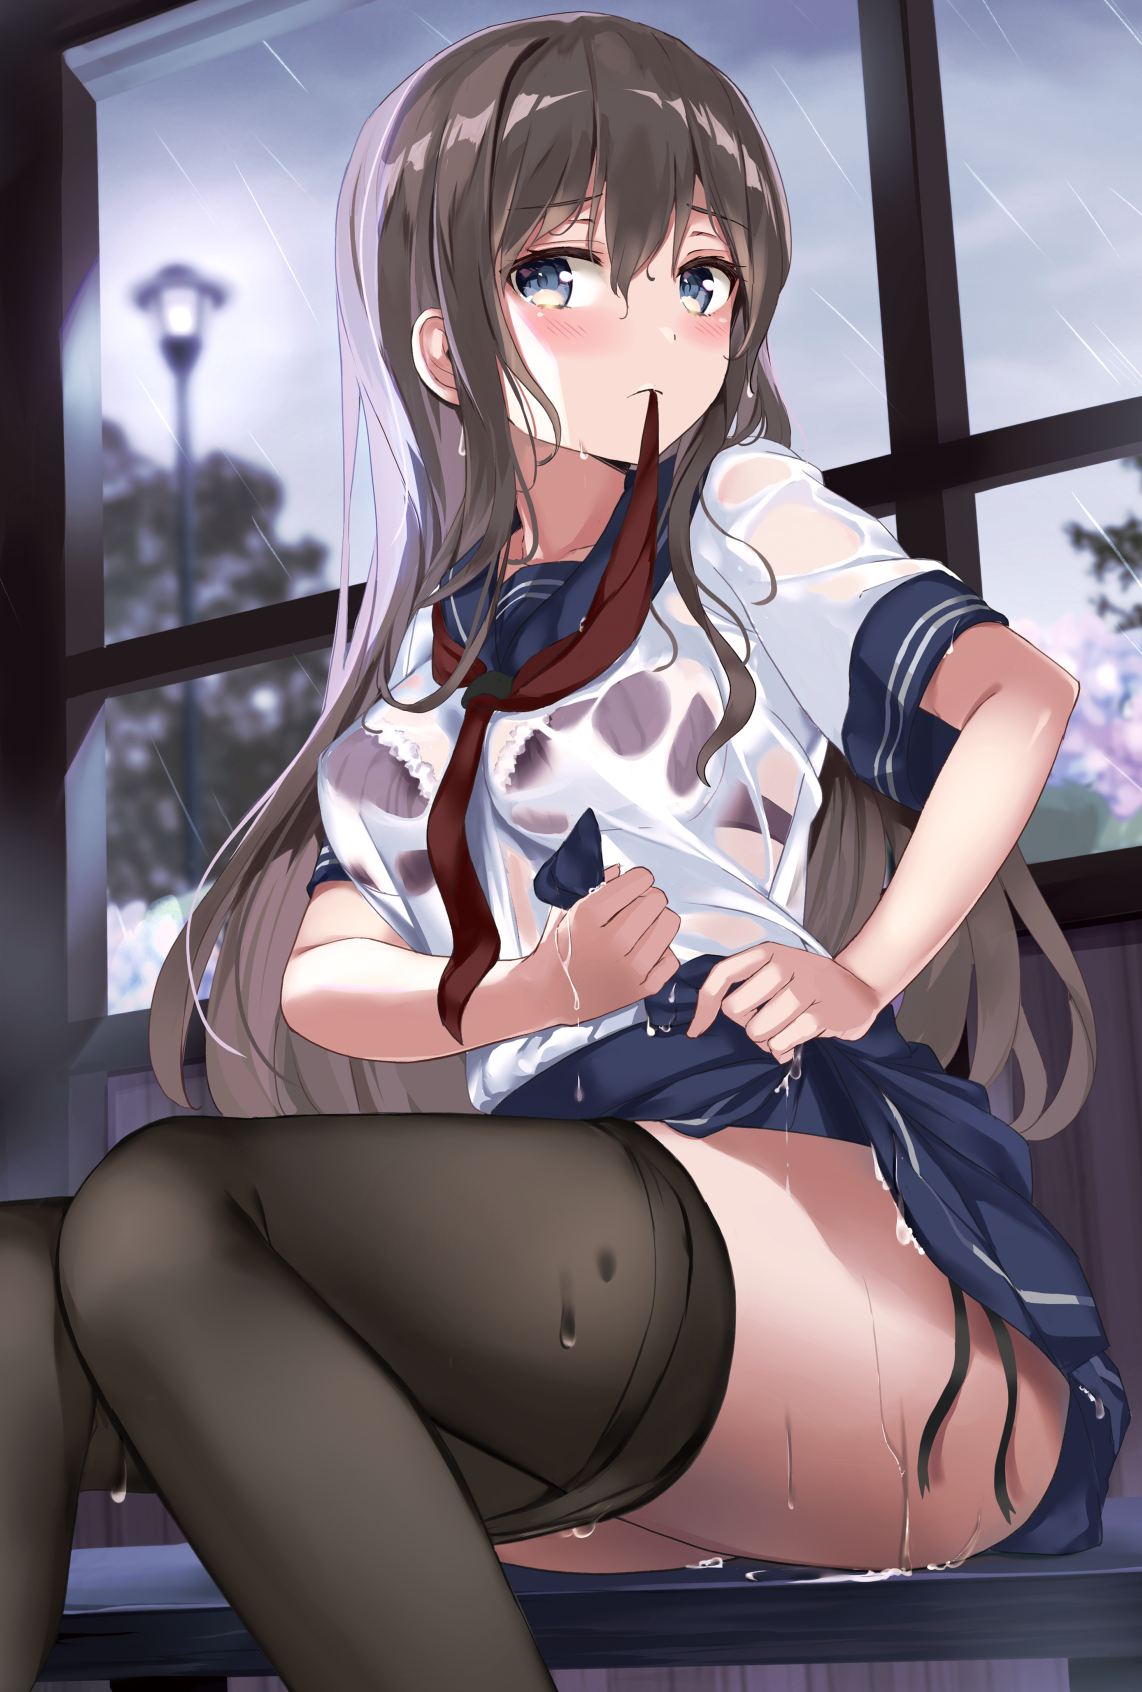 Anime 1142x1692 anime anime girls Monoto artwork dark hair long hair blue eyes blushing school uniform thigh-highs wet clothing rain curvy